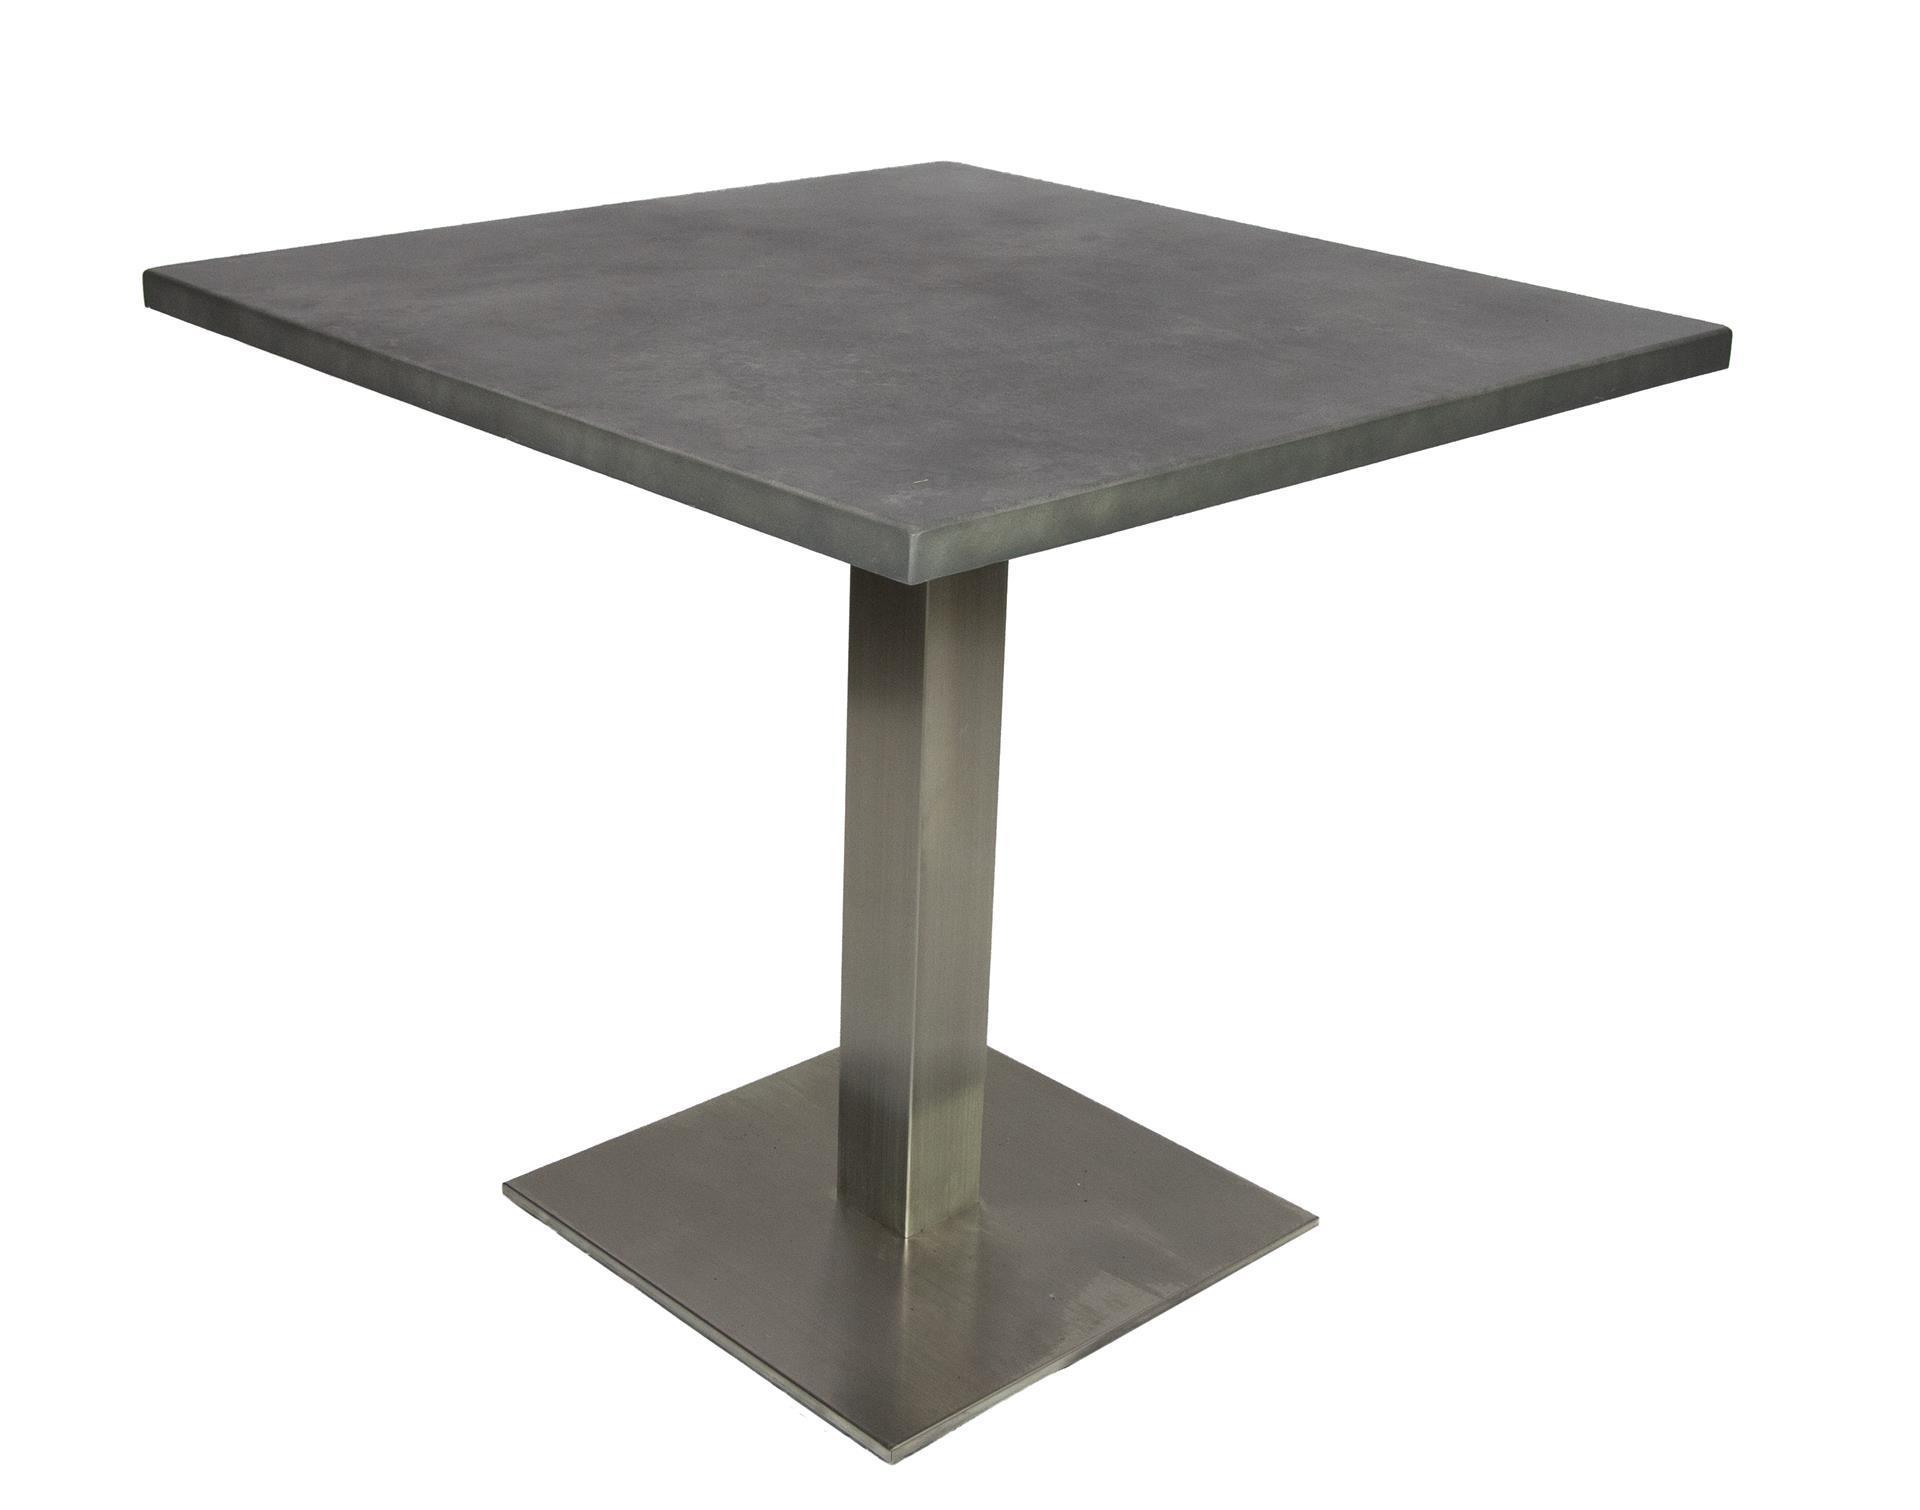 Tischplatte DL GREY, Technowood in Beton-Optik, verschiedene Formate, Stärke 30 mm